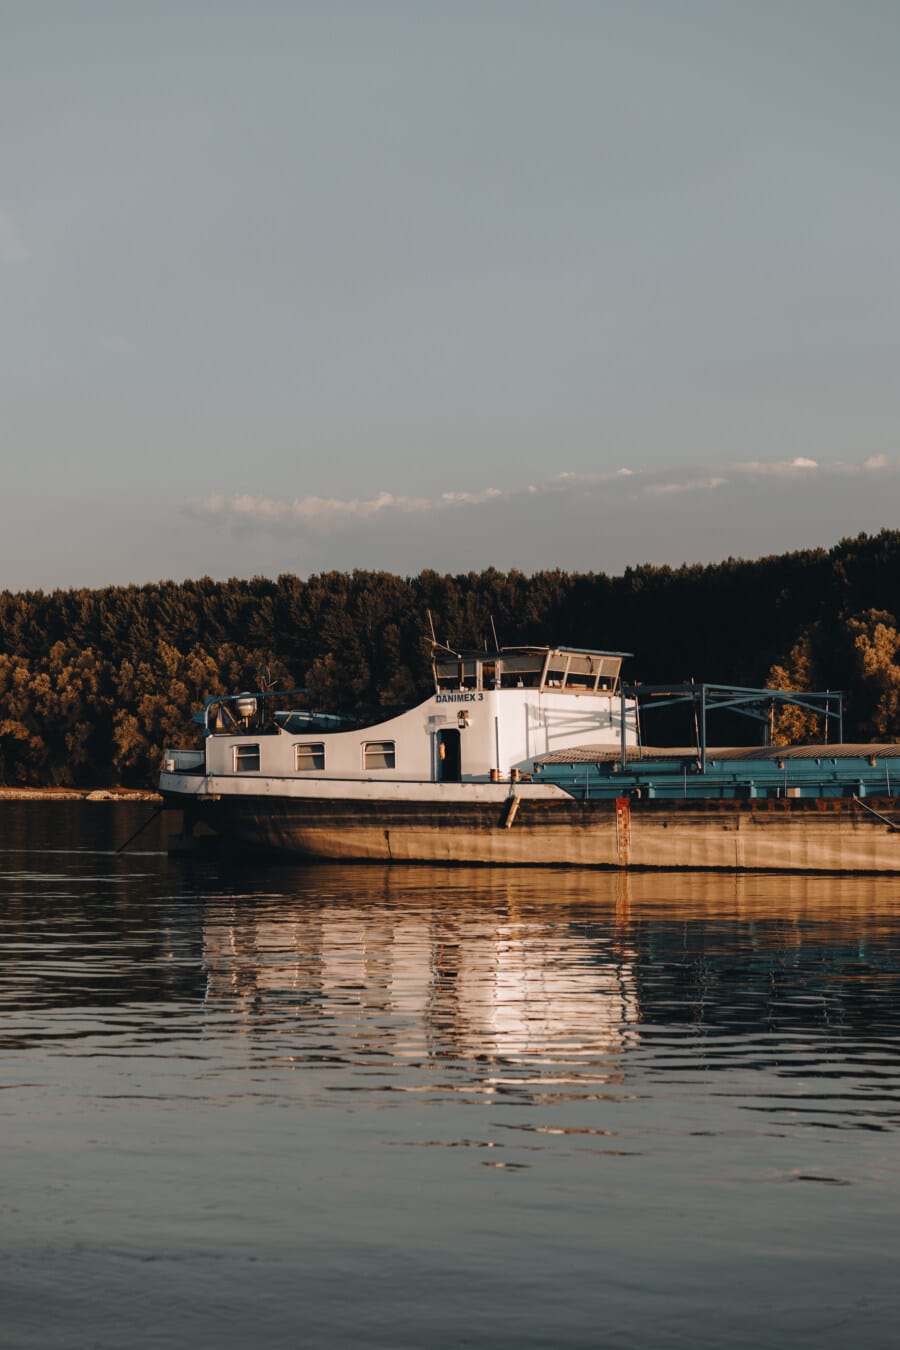 barge, close-up, ship, shipment, lake, water, river, reflection, sunset, vehicle